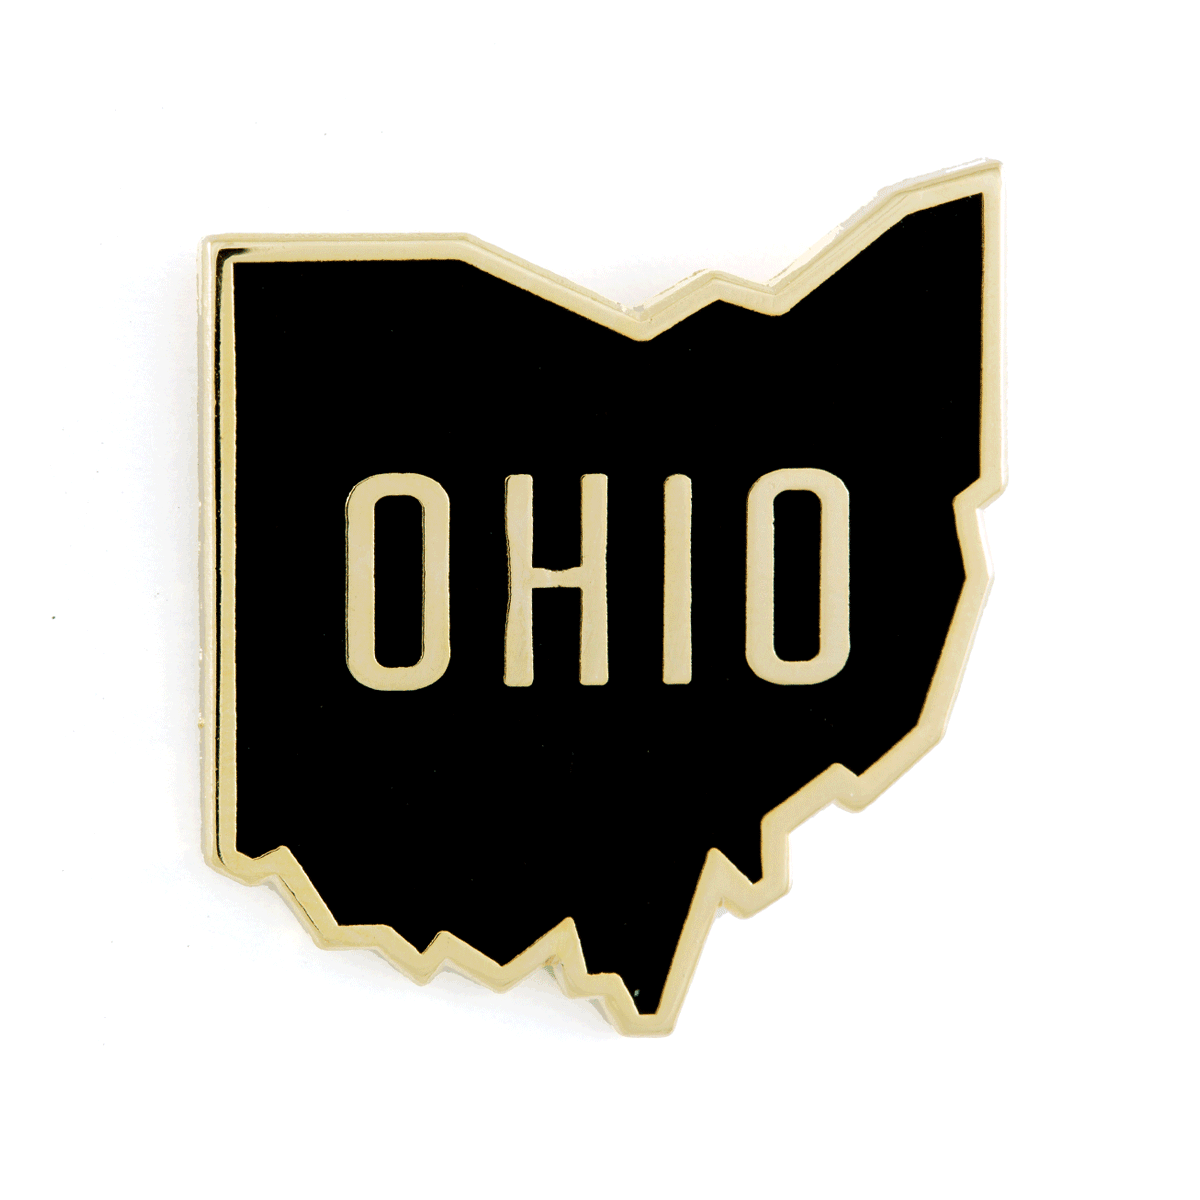 Ohio Pin